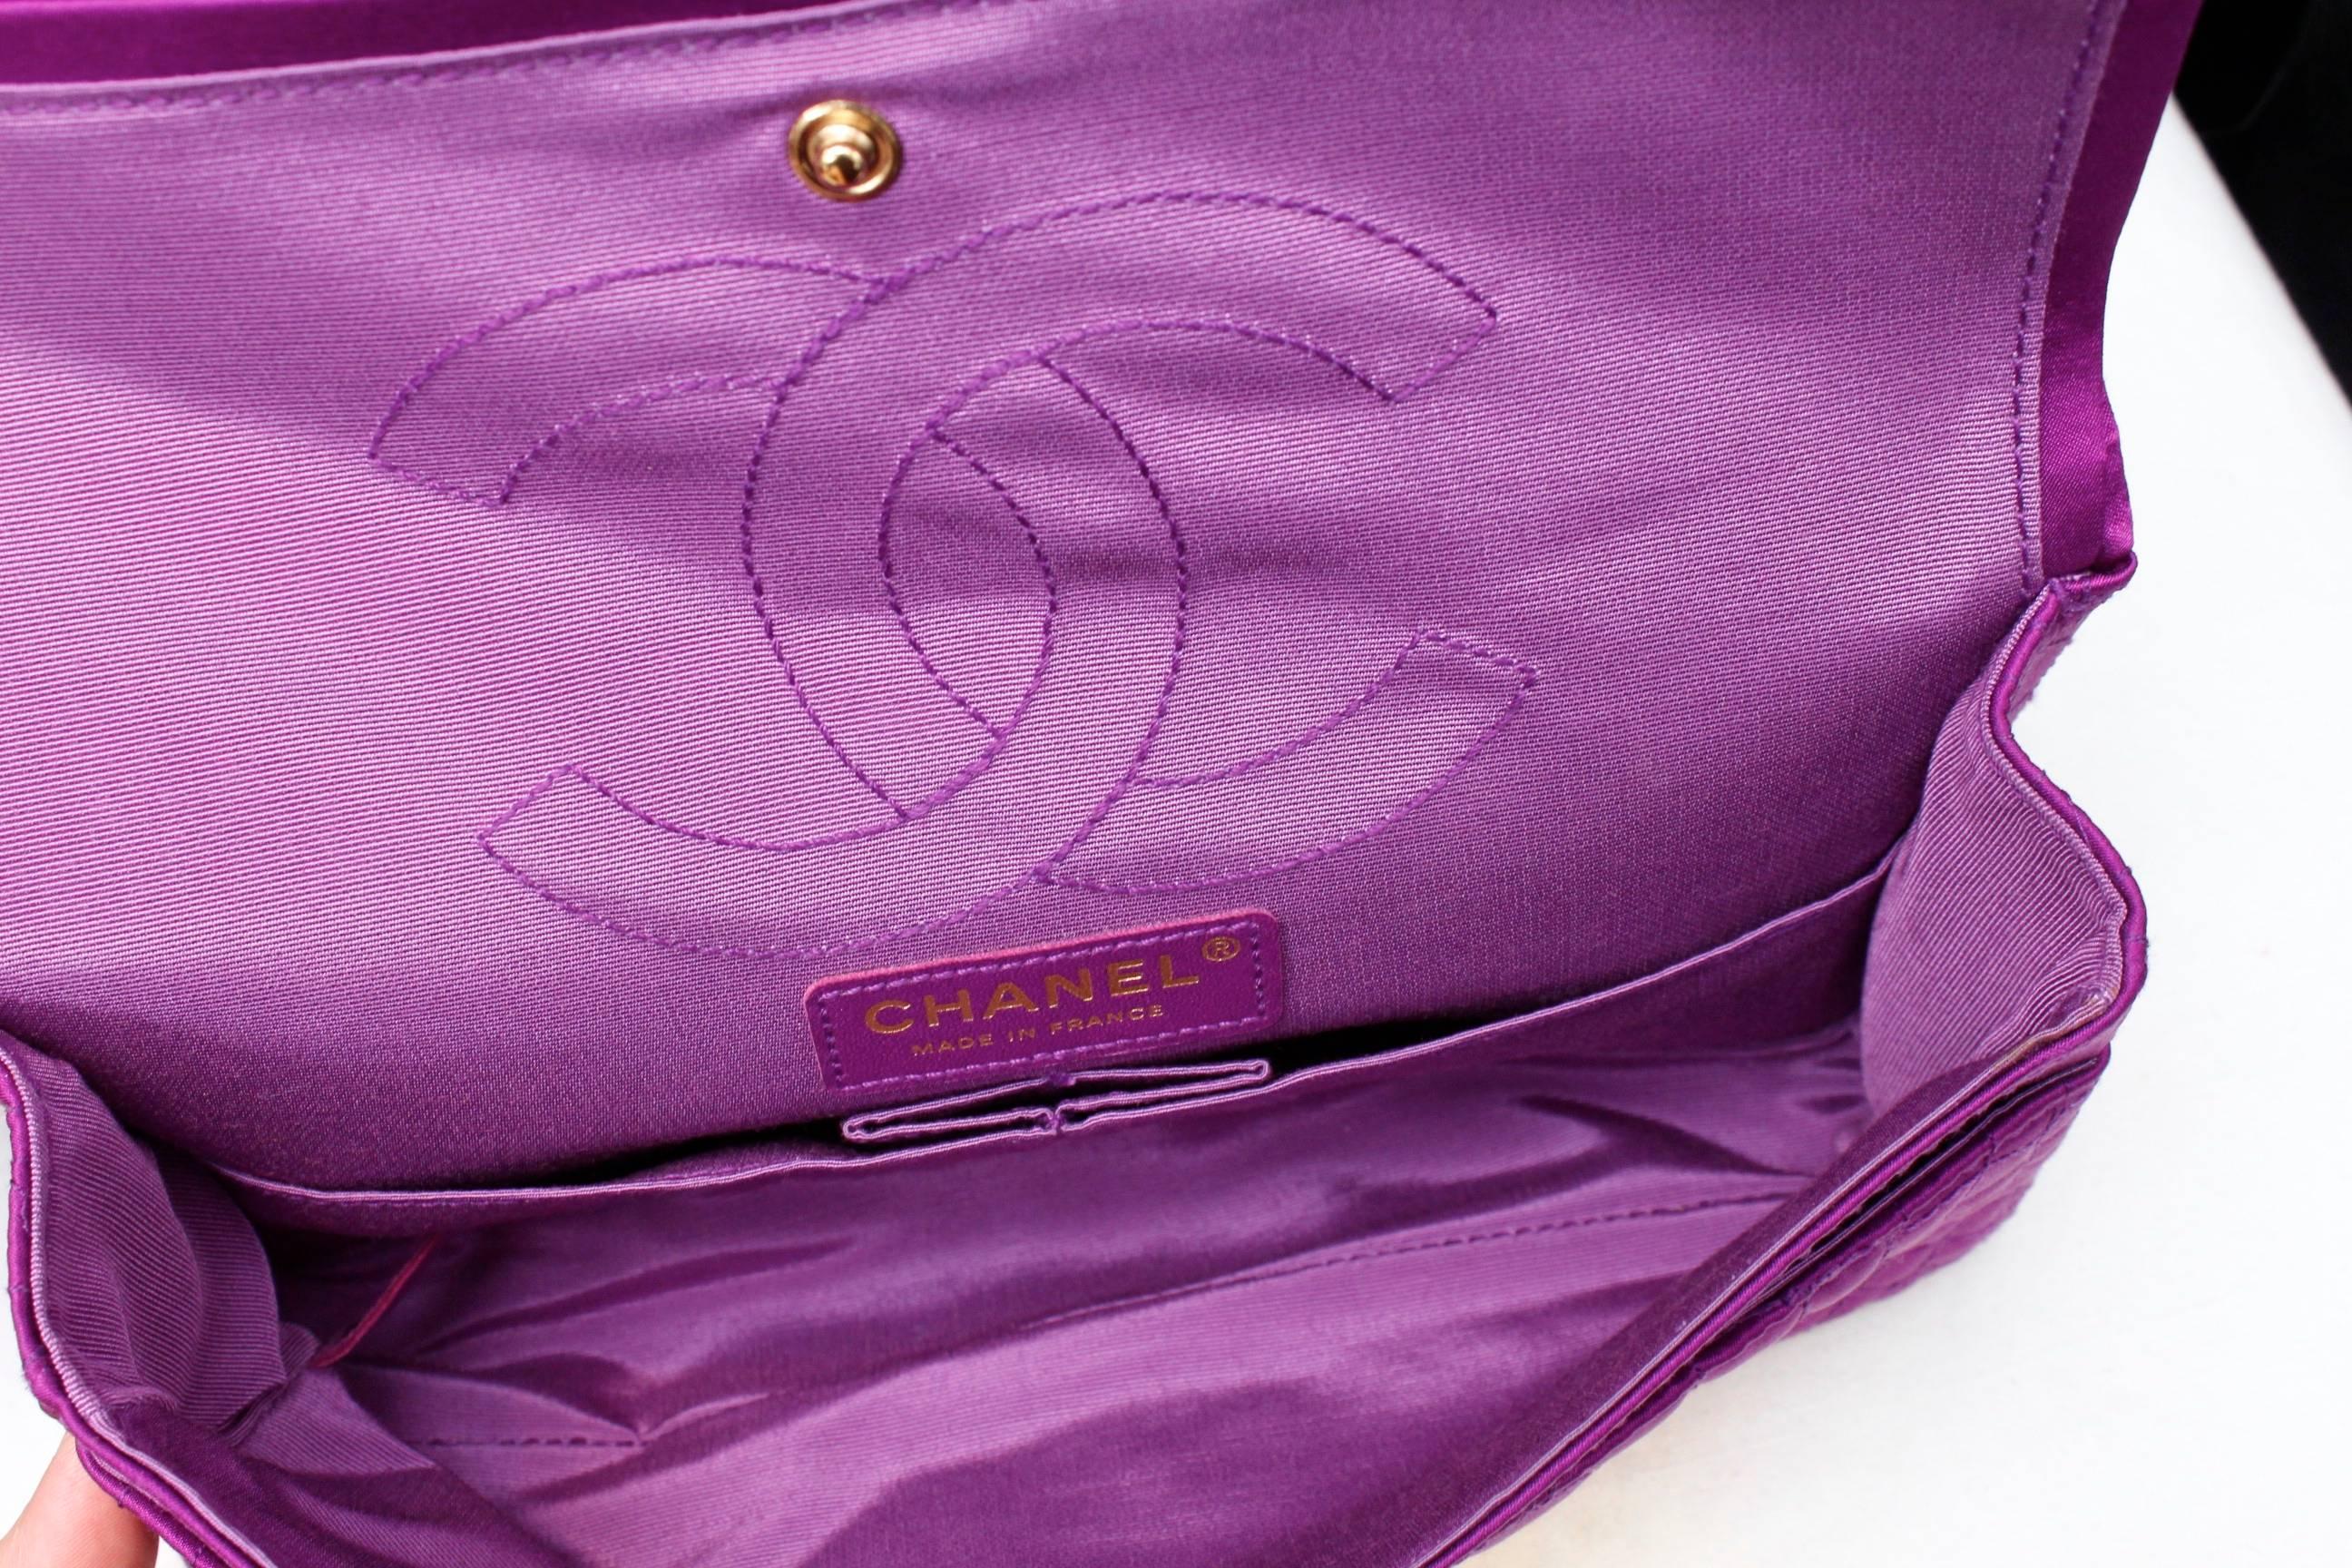 Chanel 2-55 Purple Satin Shoulder Bag with Crocodile Pattern, 2000s  For Sale 1